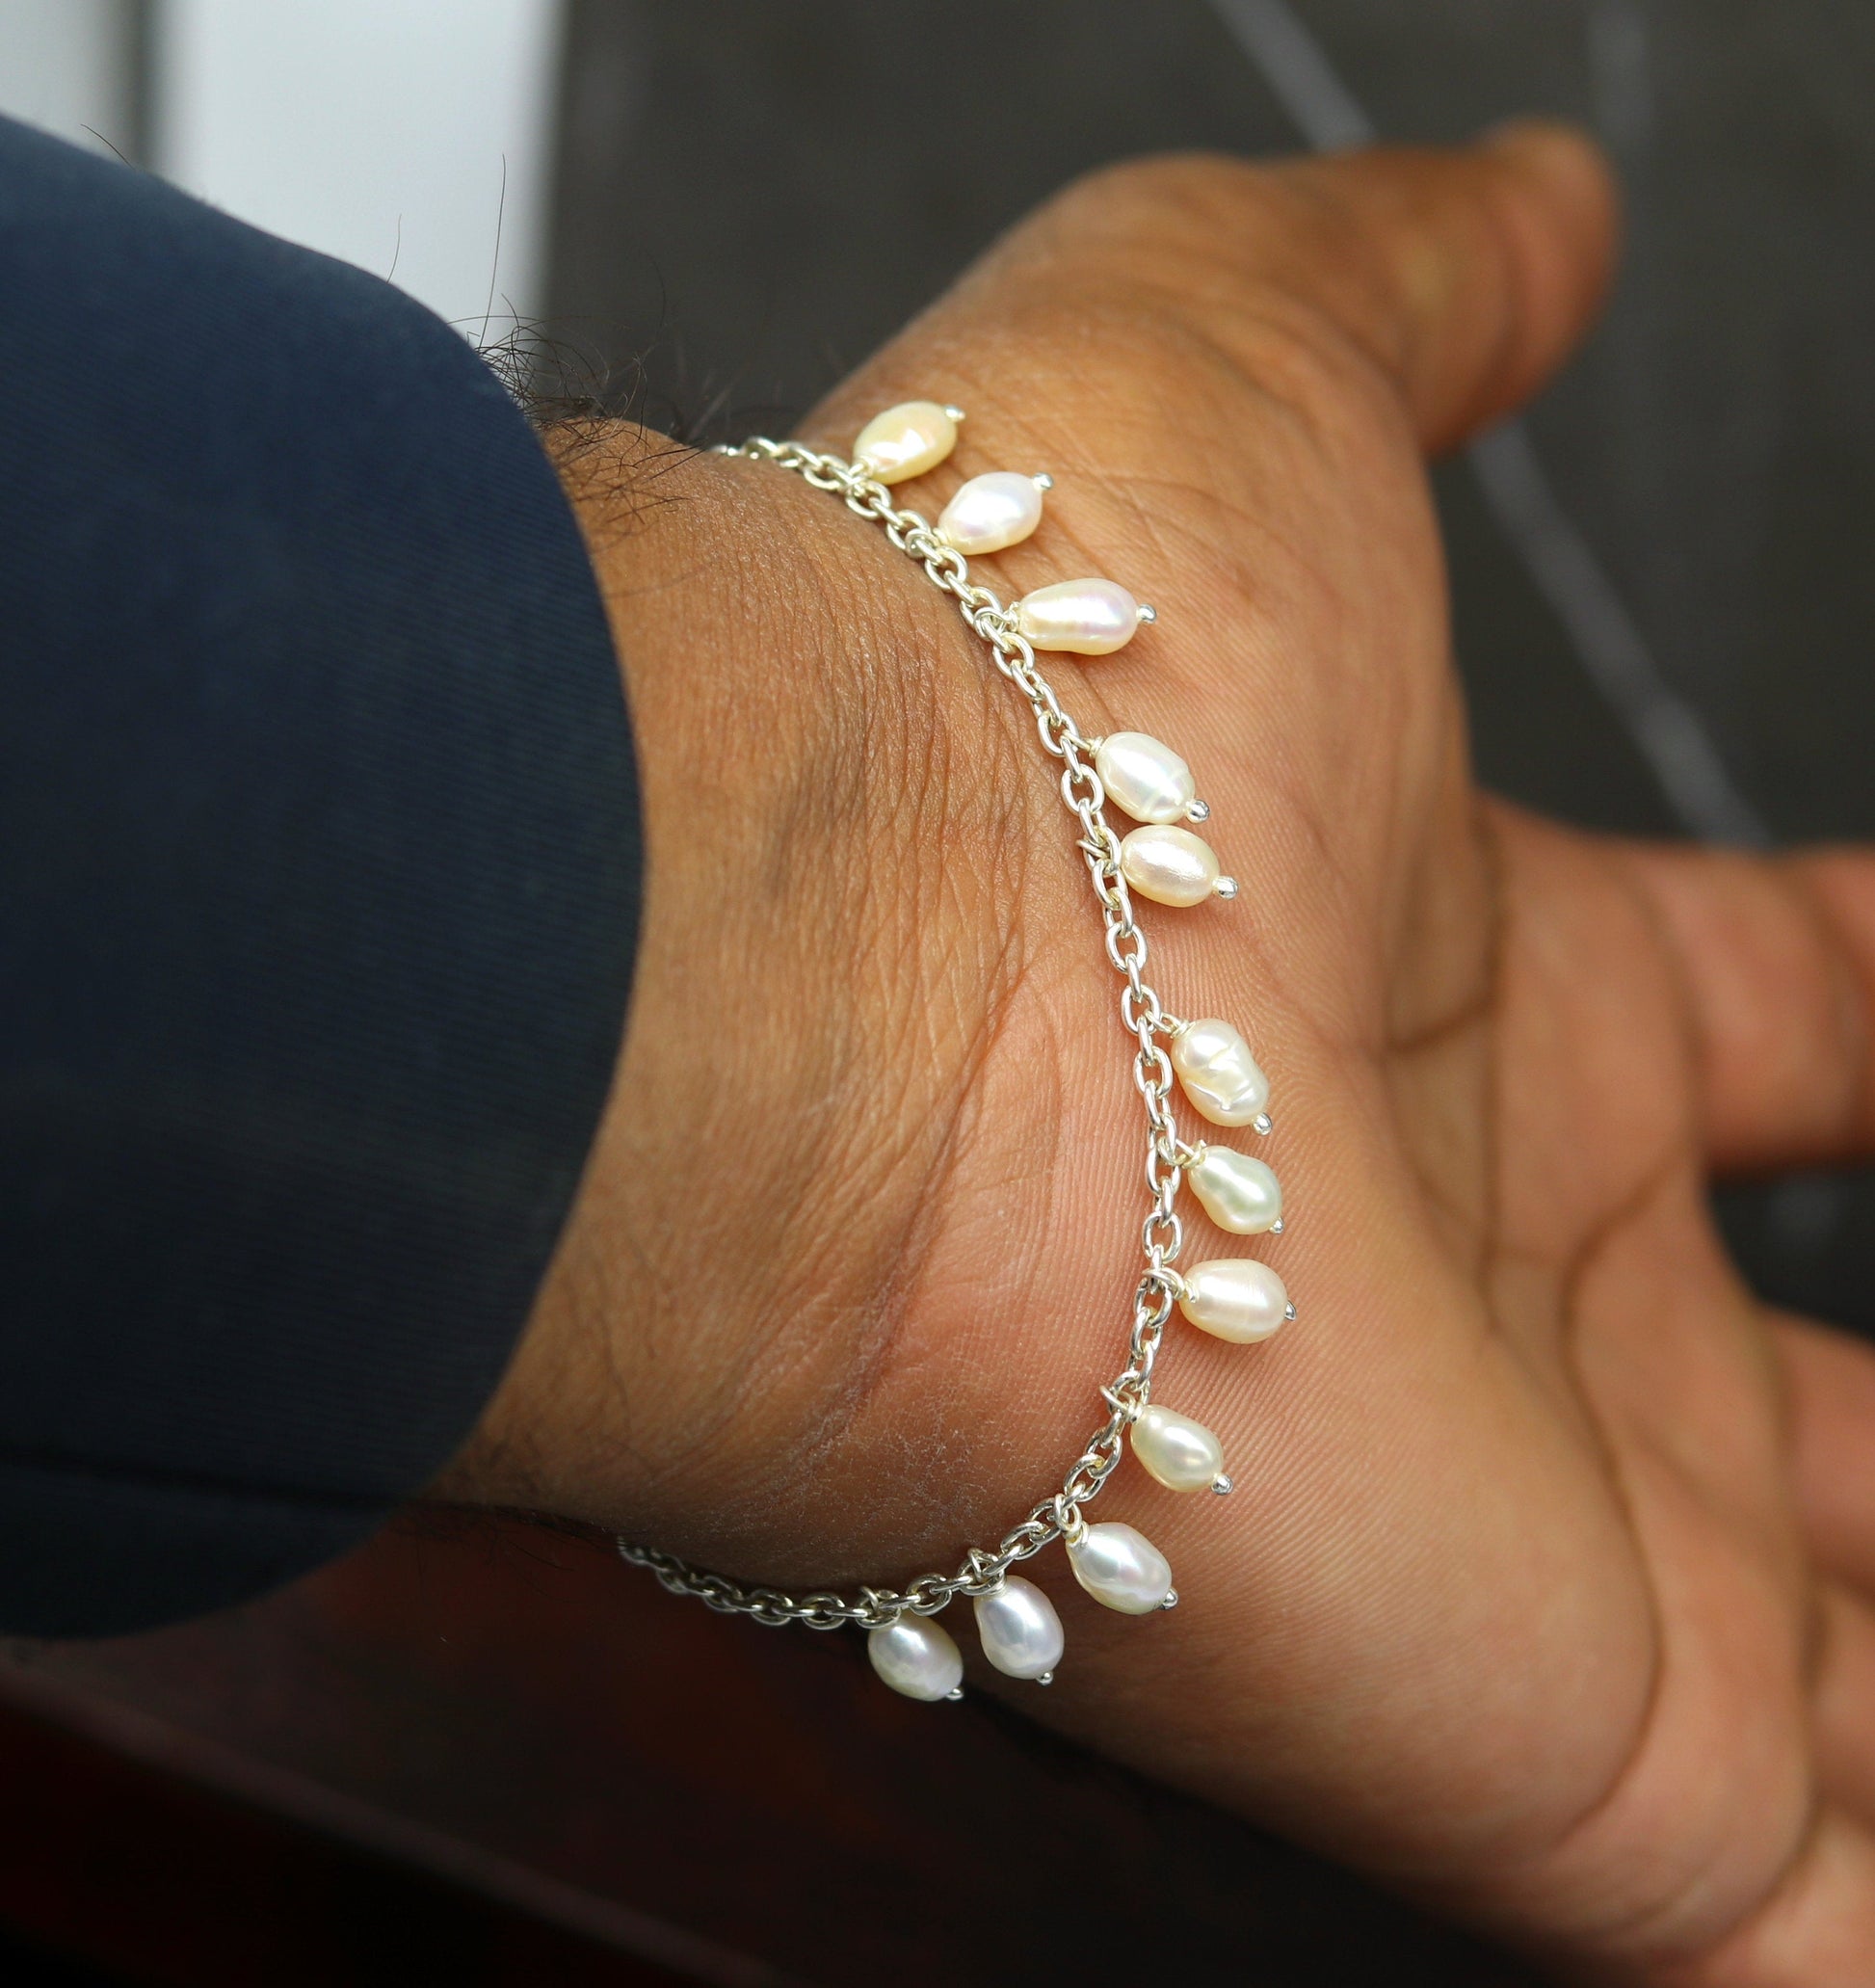 925 sterling silver handmade customized charm bracelet, amazing stylish pearl bracelet unisex gifting jewelry belly dance jewelry nsbr192 - TRIBAL ORNAMENTS